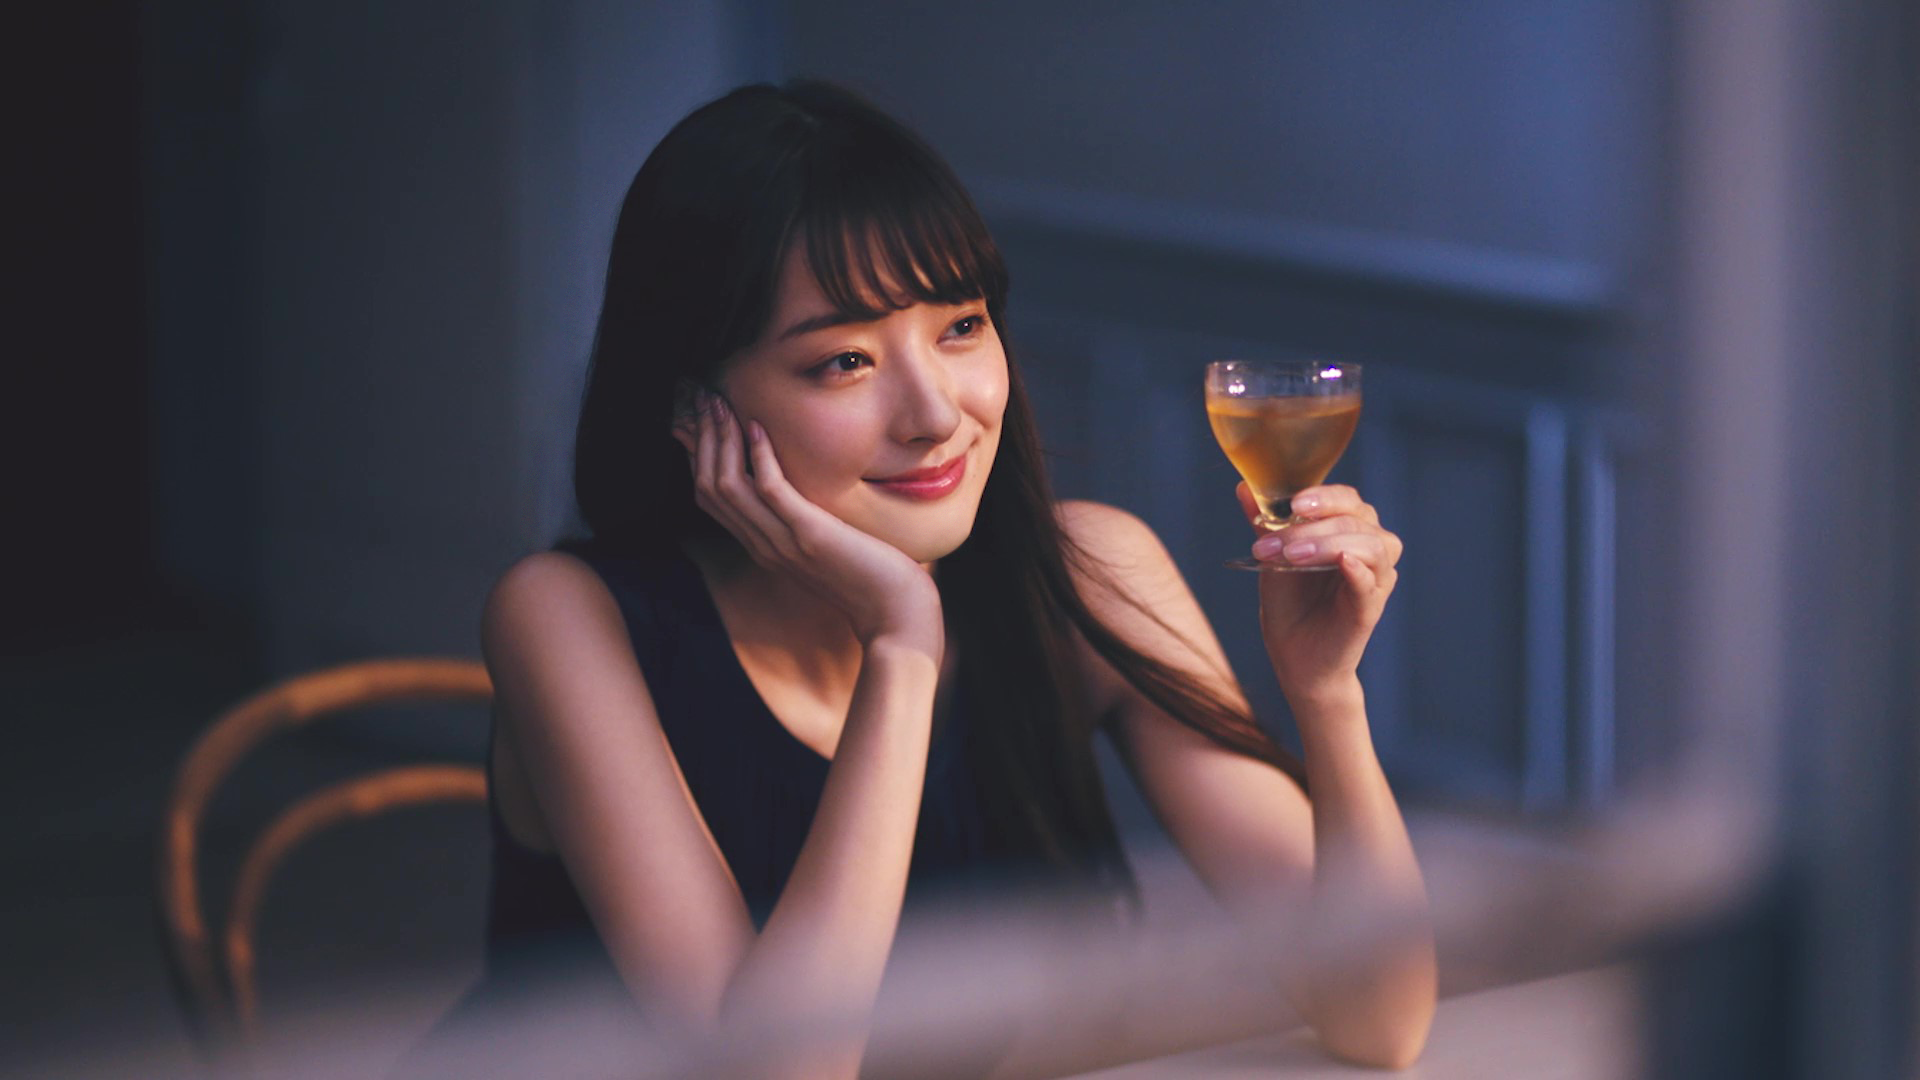 The Choya 新cm完成 新キャラクターに宮本茉由さんを起用 年8月21日 金 より全国オンエア開始 チョーヤ梅酒 株式会社のプレスリリース